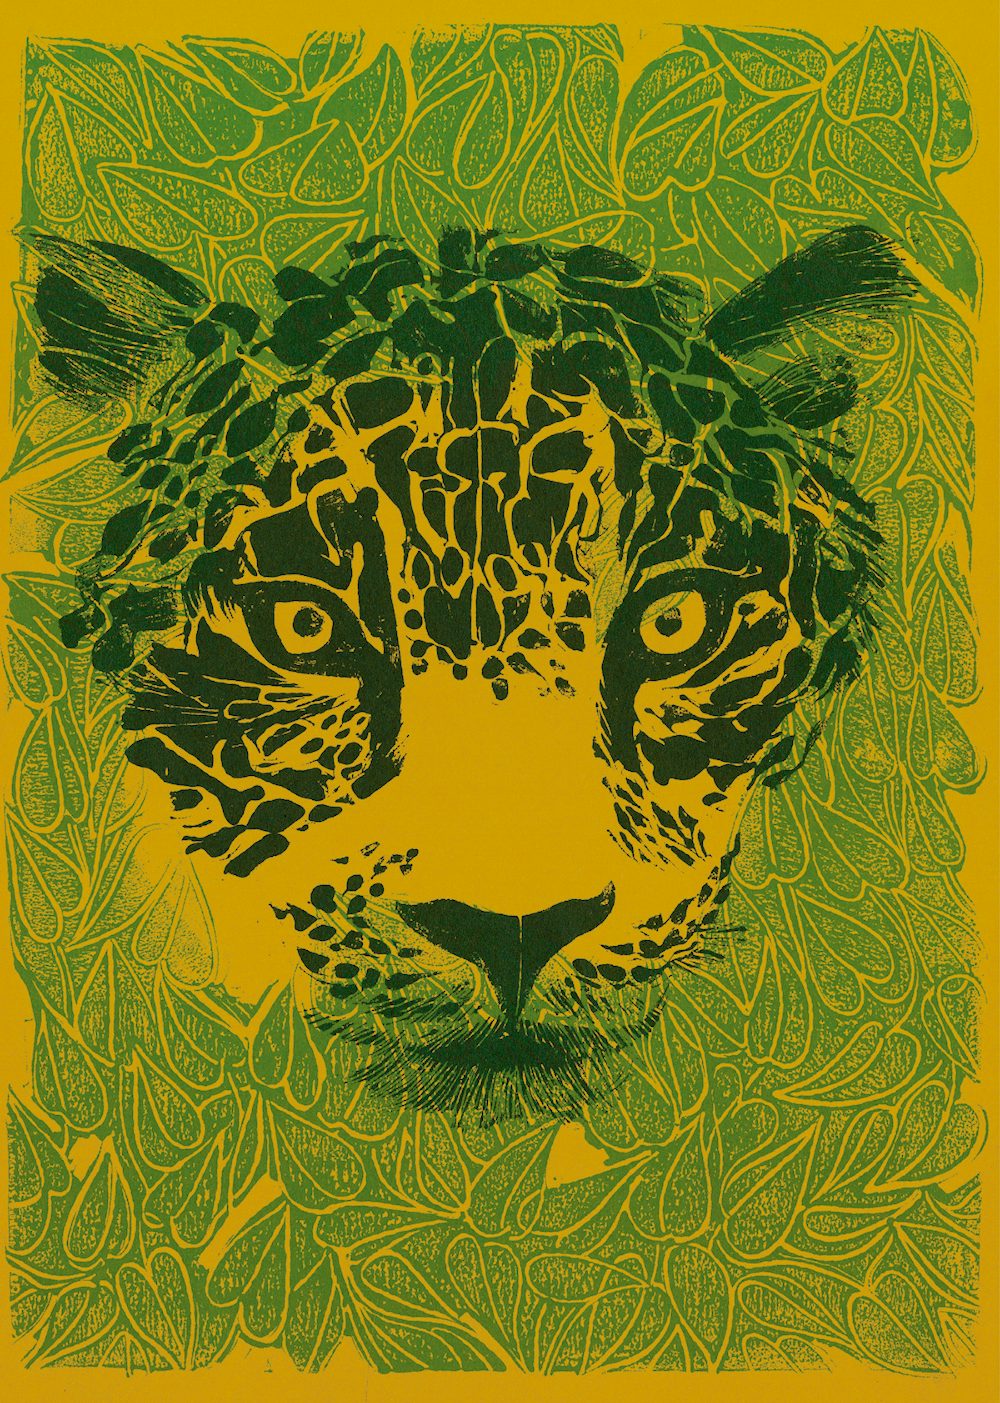 An illustration of a jaguar's face from The Jungle by Helen Borten